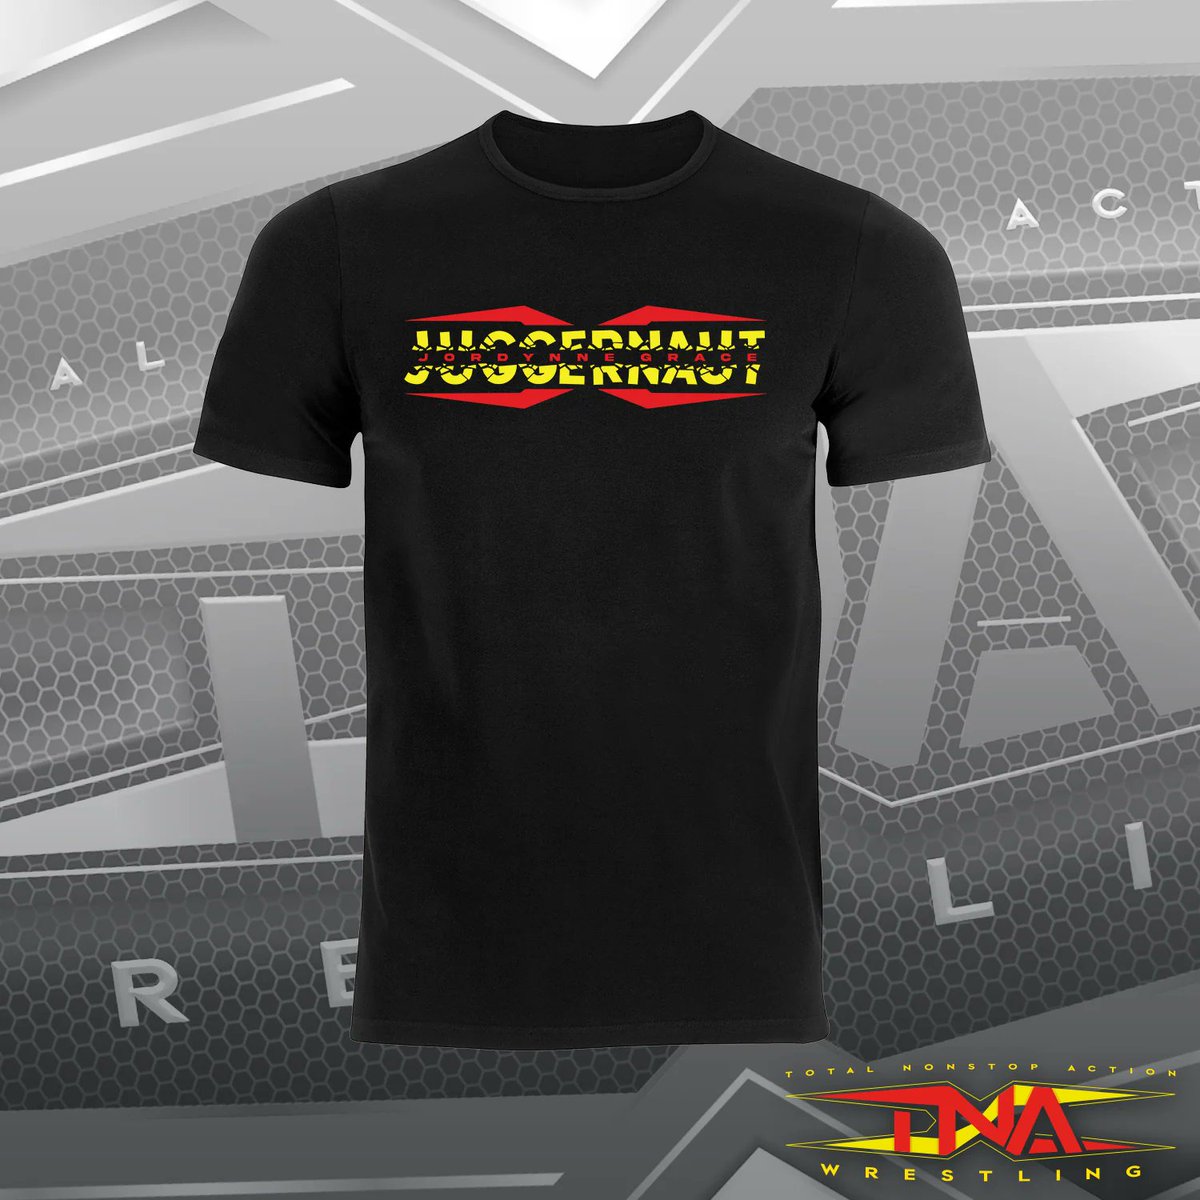 The @JordynneGrace Juggernaut T-Shirt is AVAILABLE NOW on TNAMerch.com! HERE: tnamerch.com/collections/al…